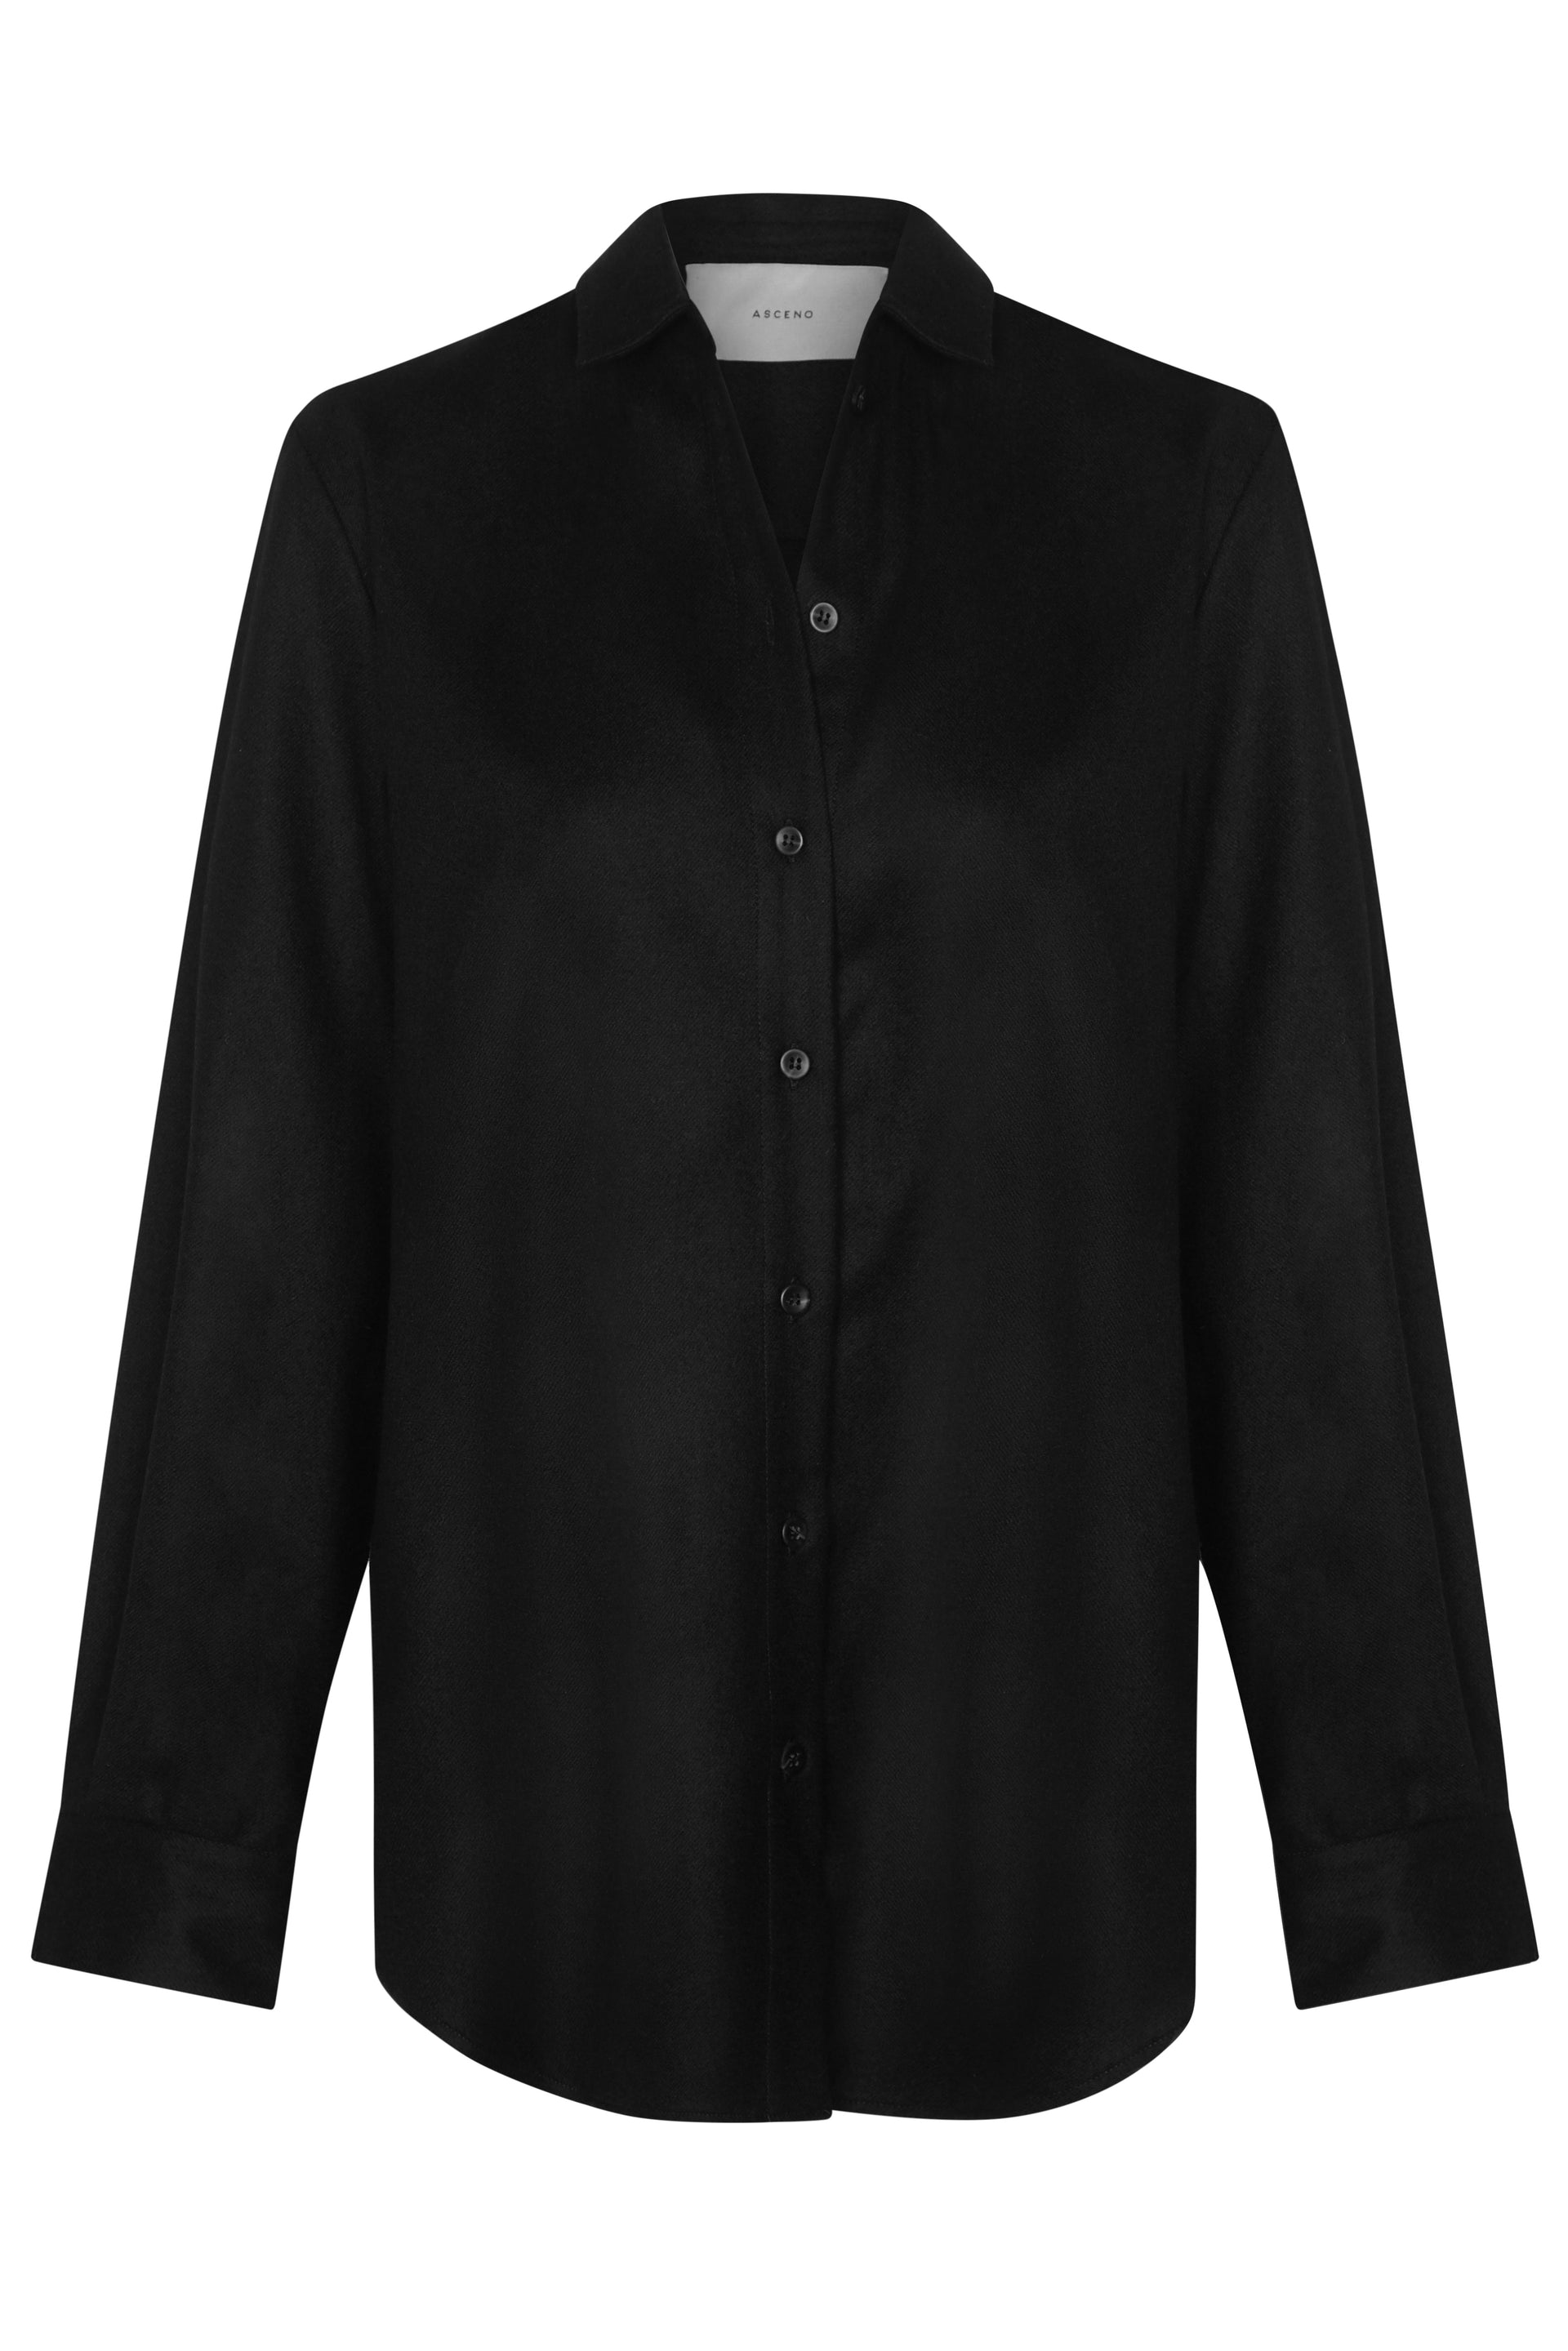 London Shirt Black Wool Cashmere Flannel